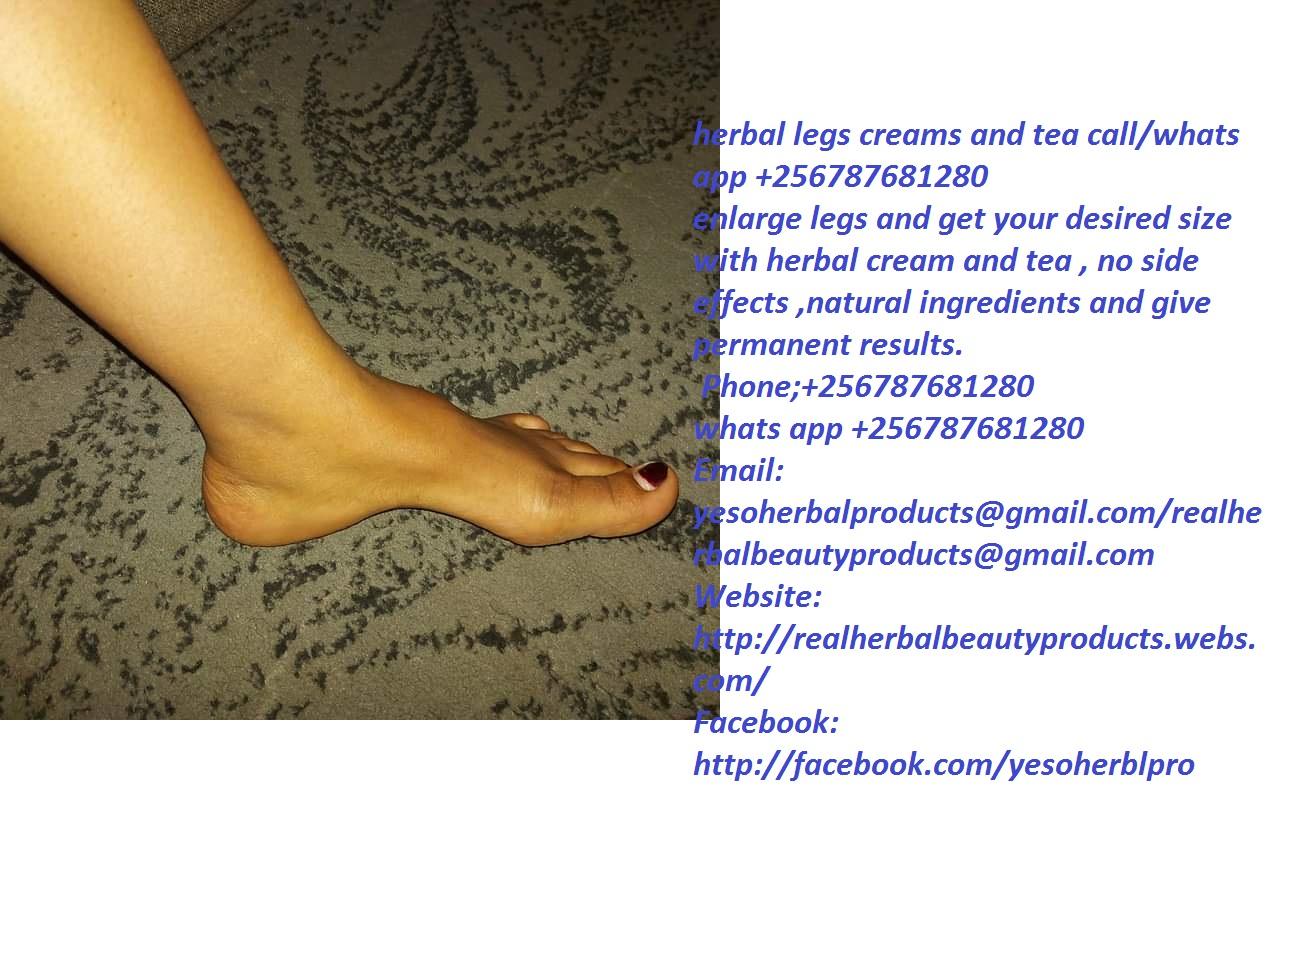 herbal legs creams and tea call/whats app +256787681280